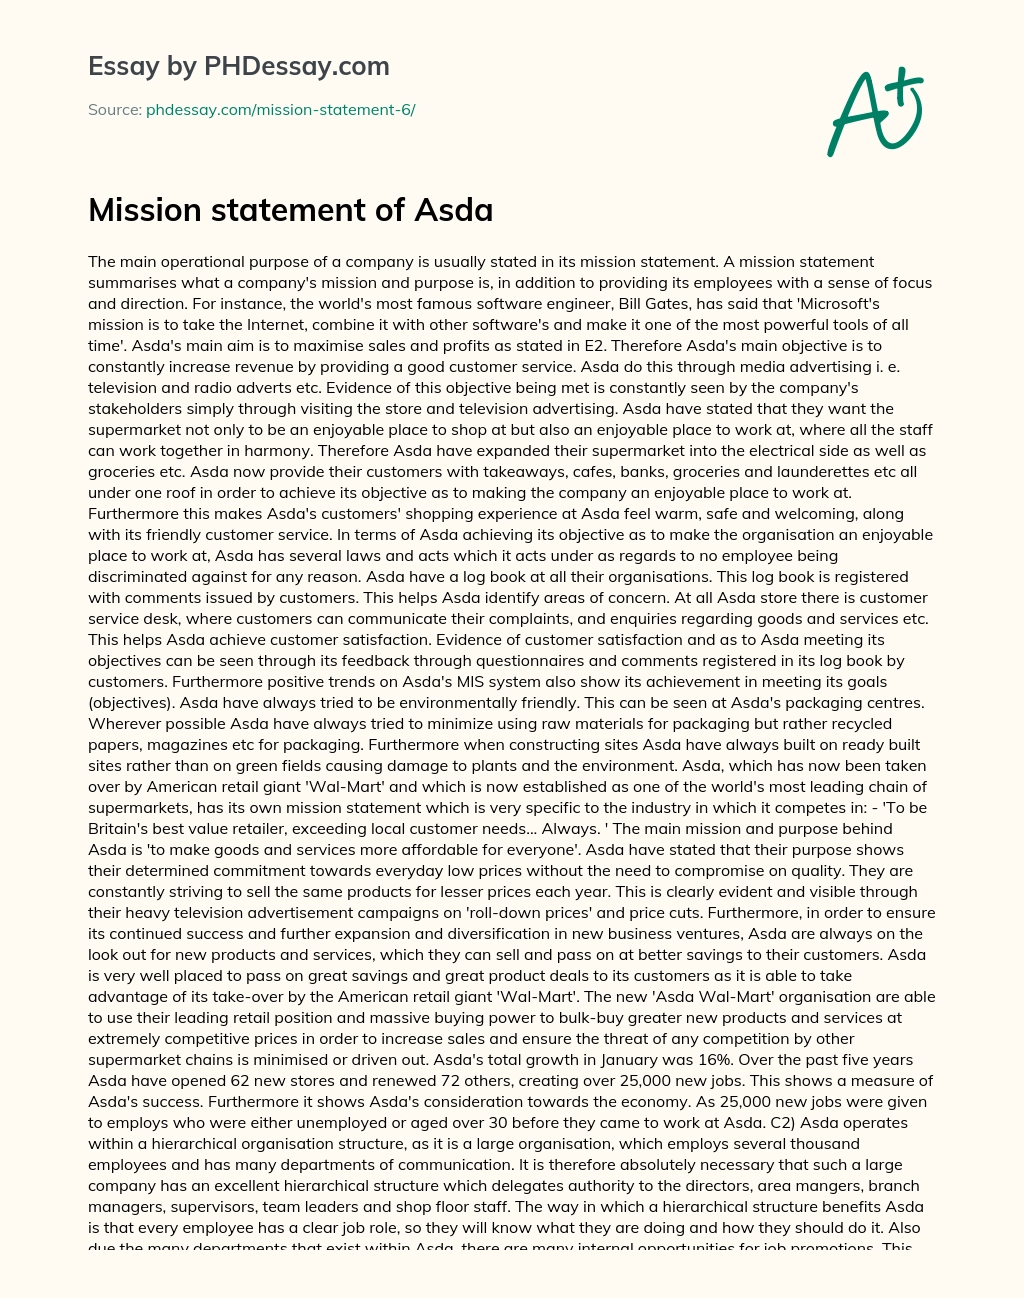 Mission statement of Asda essay